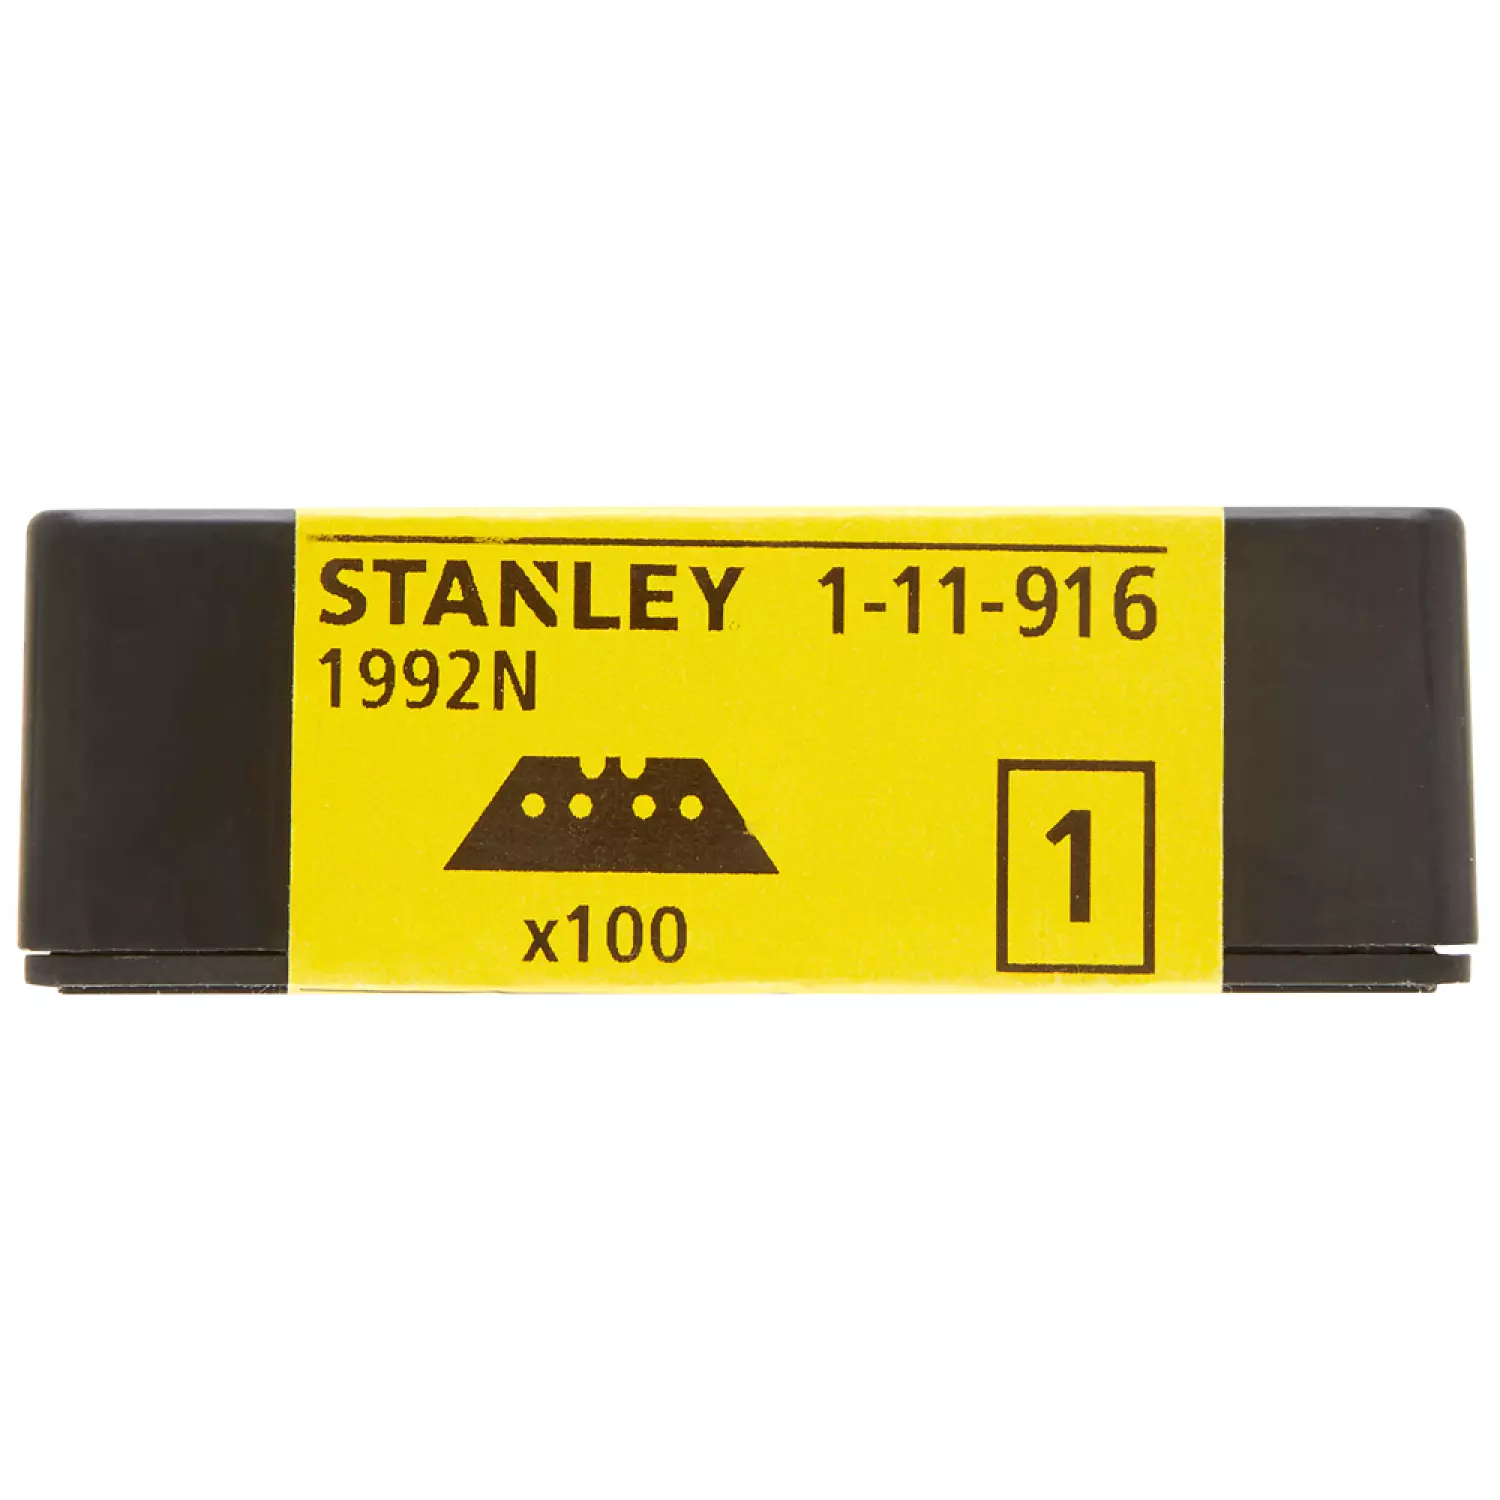 Stanley 1-11-916 Reservemesjes 1992 - lang model (100st)-image